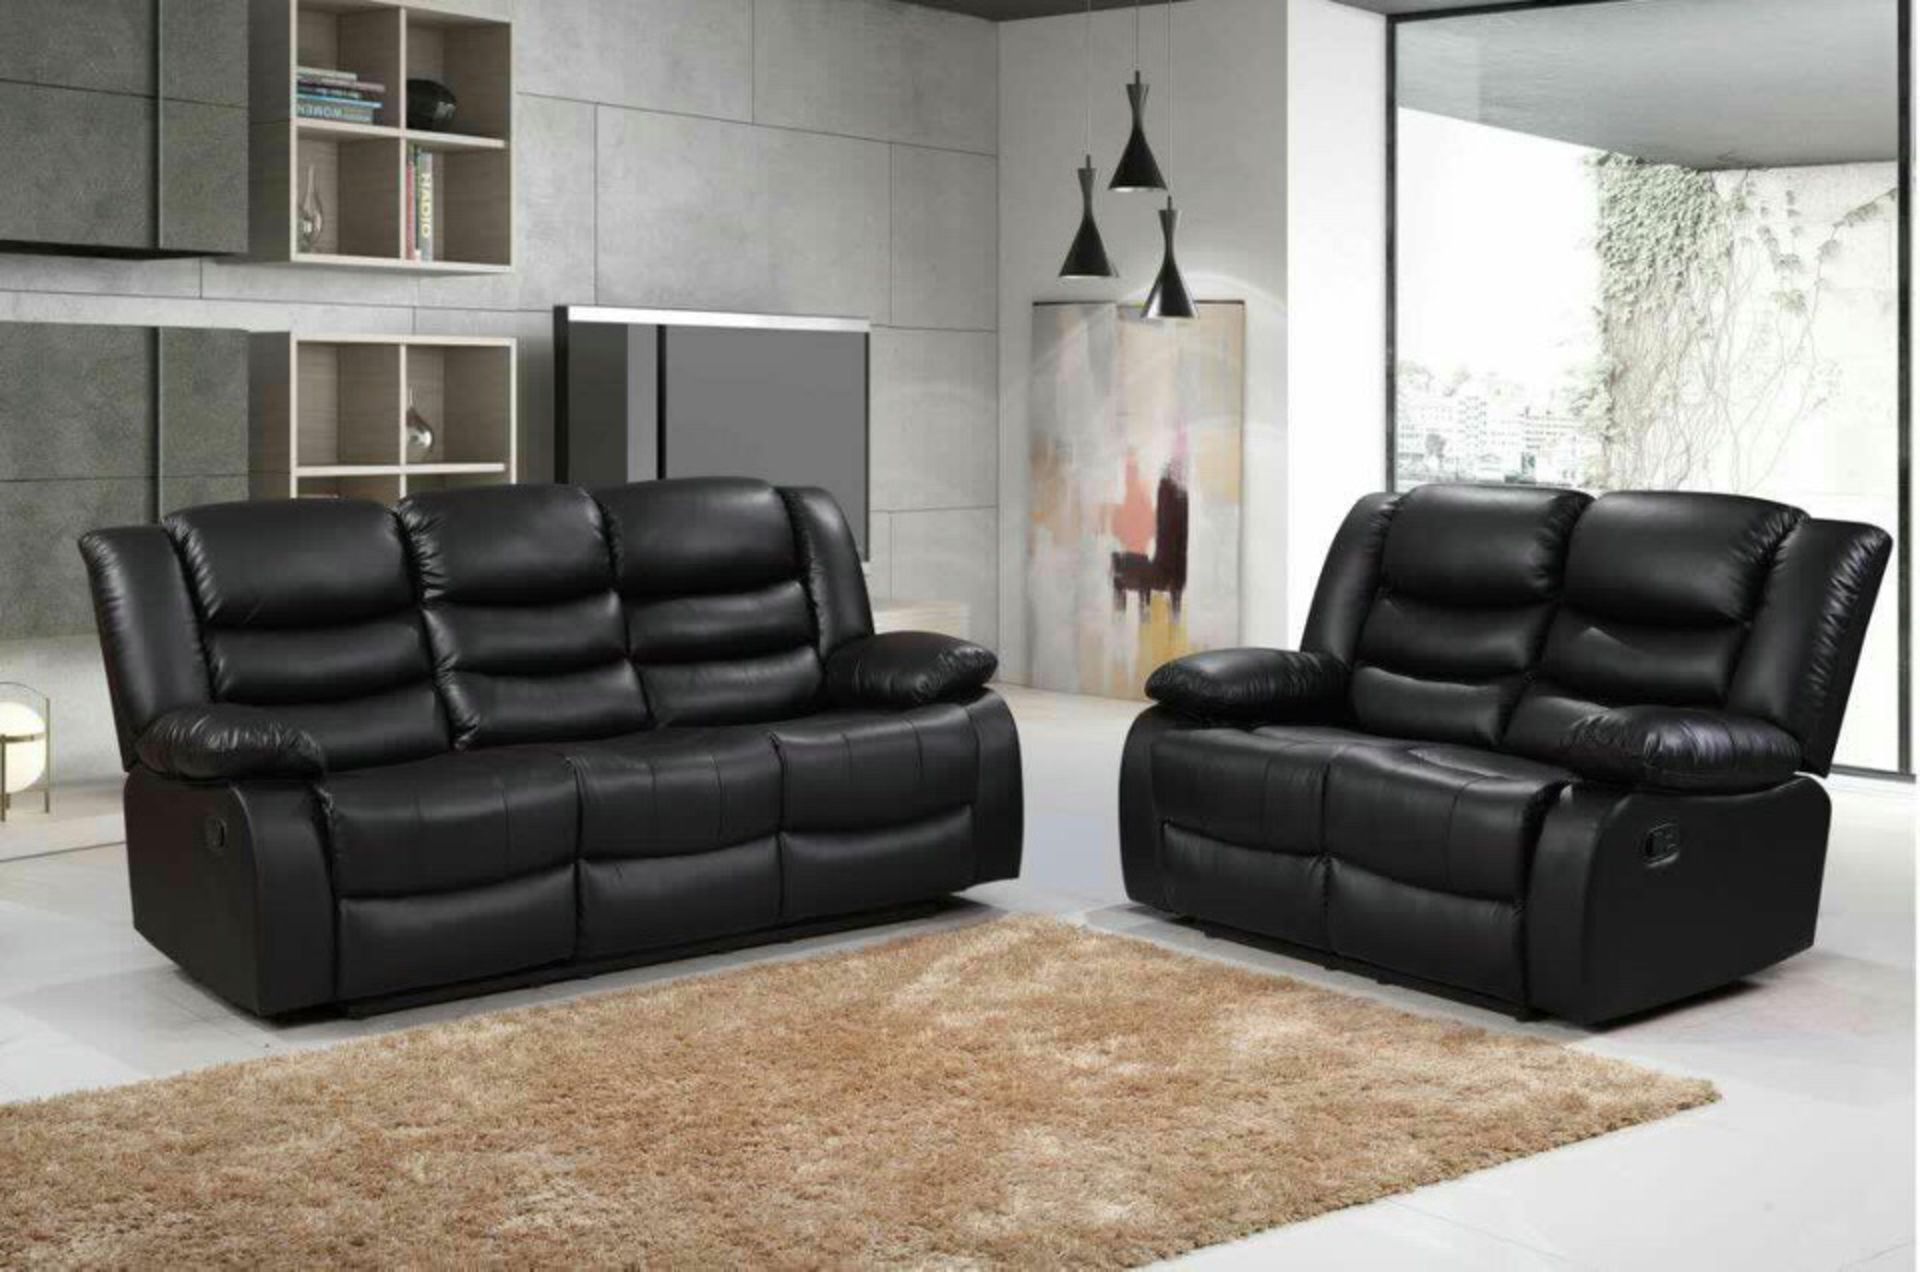 Brand new boxed 3 seater plus 2 seater miami black leather reclining sofas